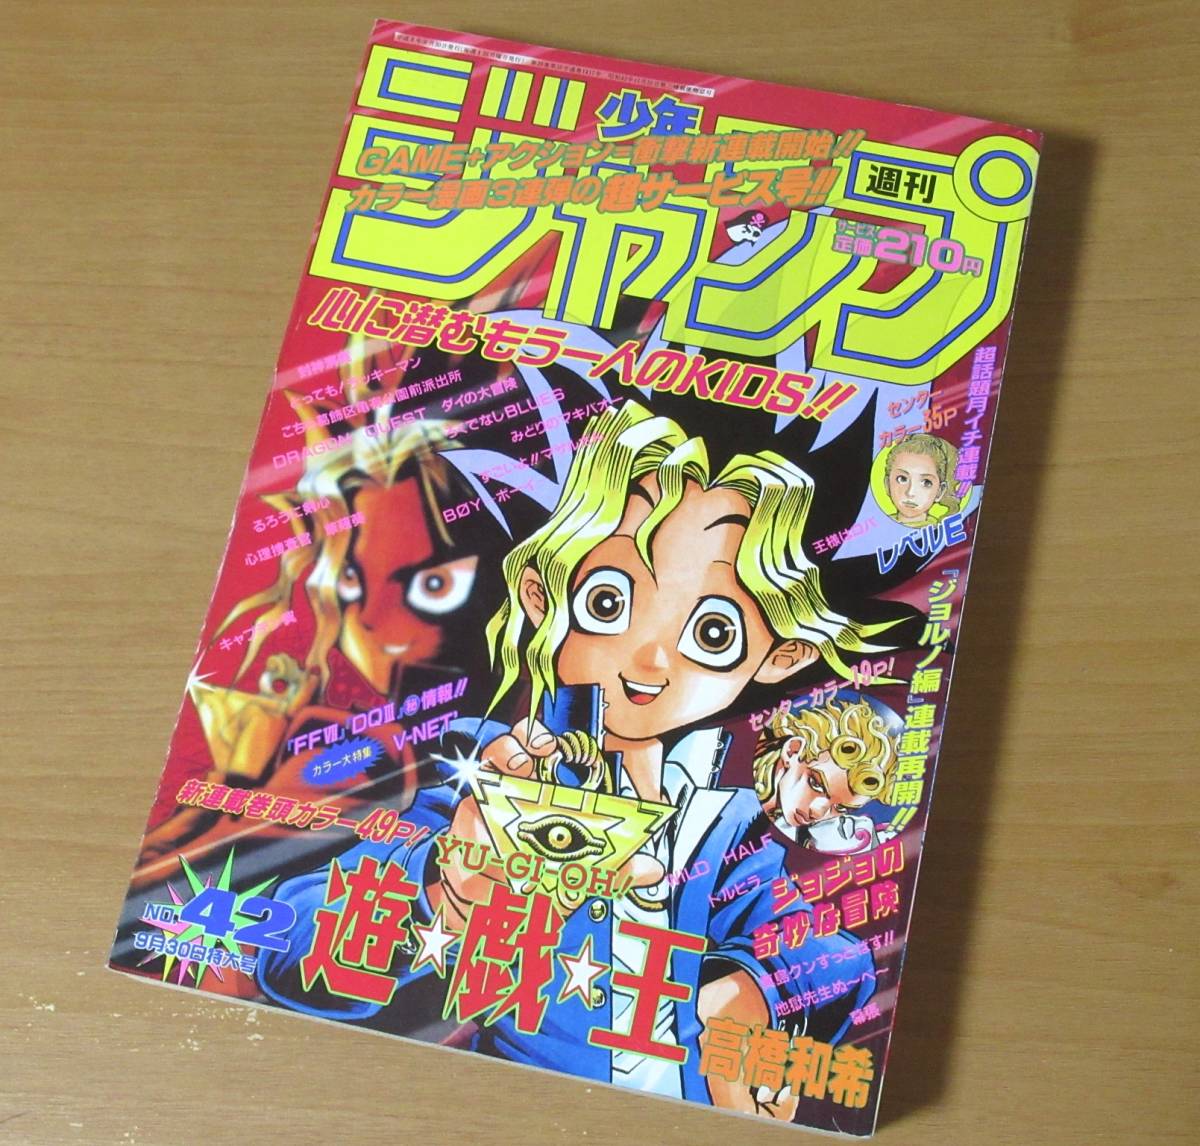 No2998/遊戯王 新連載号 初号 週刊少年ジャンプ 1996年9月30日 42号